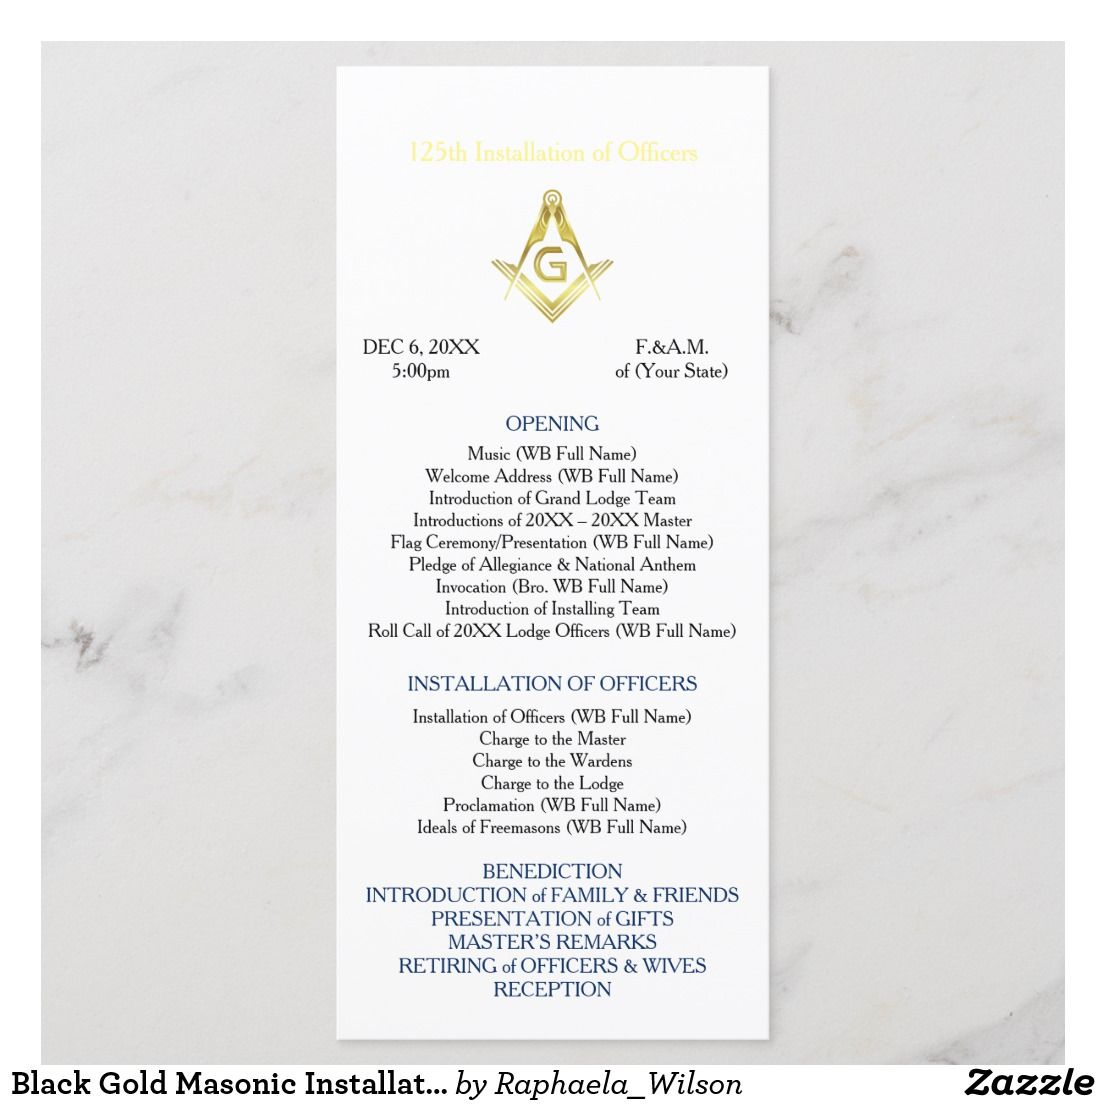 Black Gold Masonic Installation Program Template Zazzle within dimensions 1106 X 1106